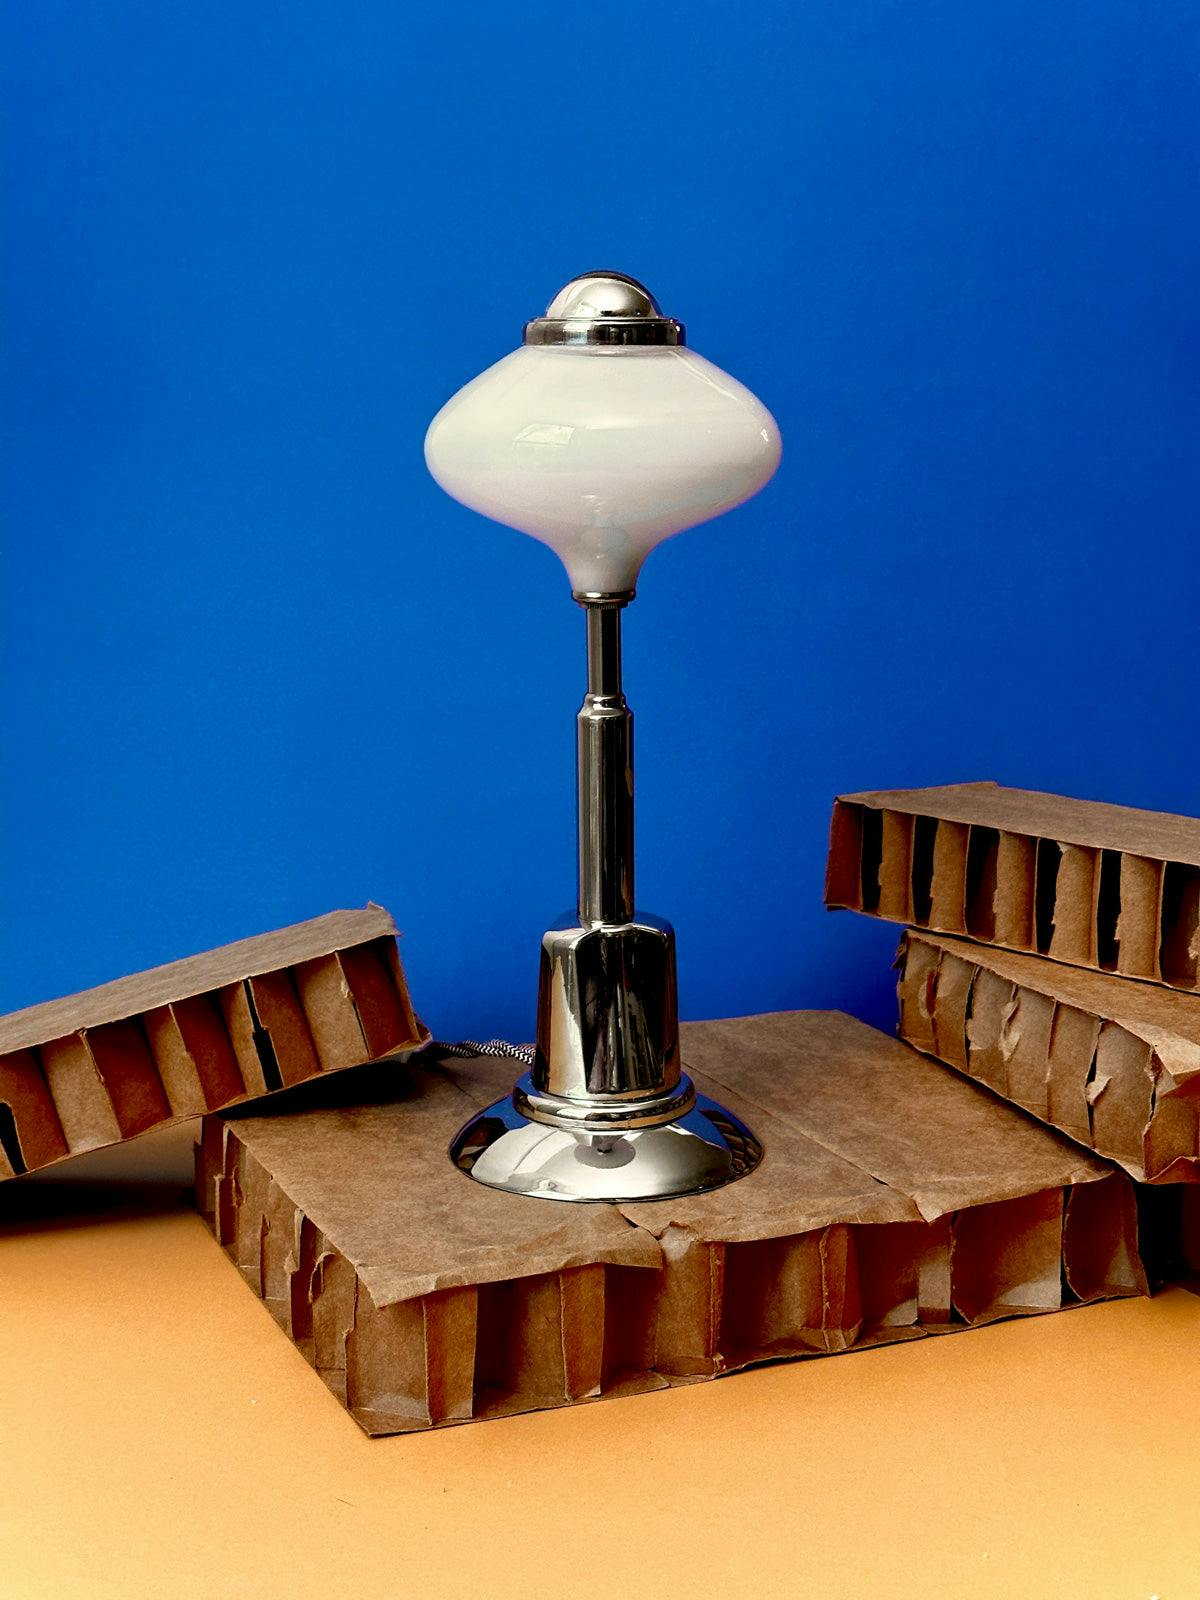 LFVR 6.01 Lamp by Nathan Lee Beck Studio